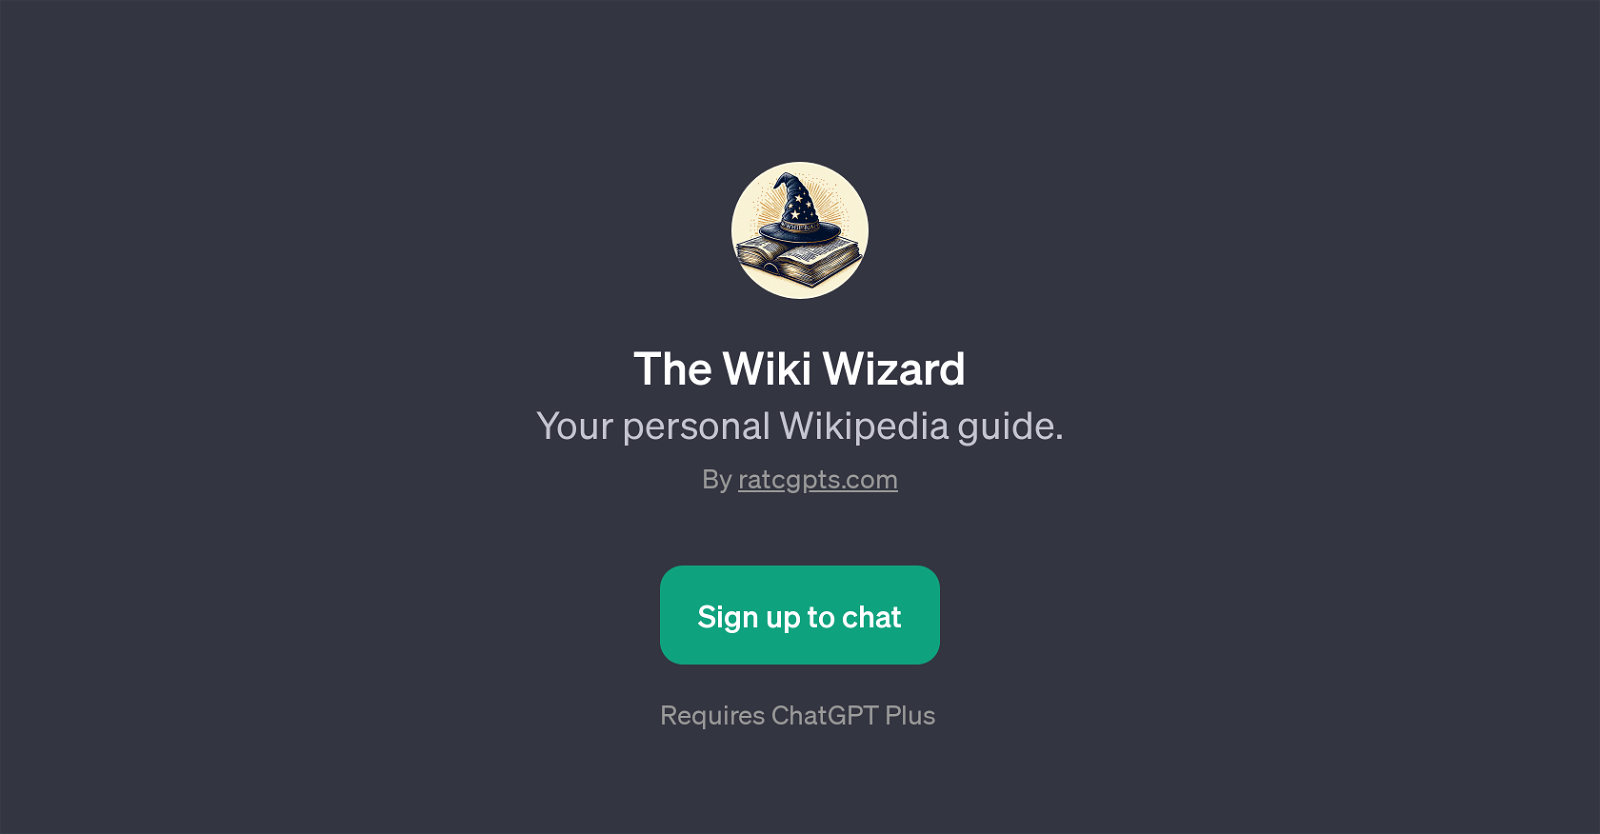 The Wiki Wizard website